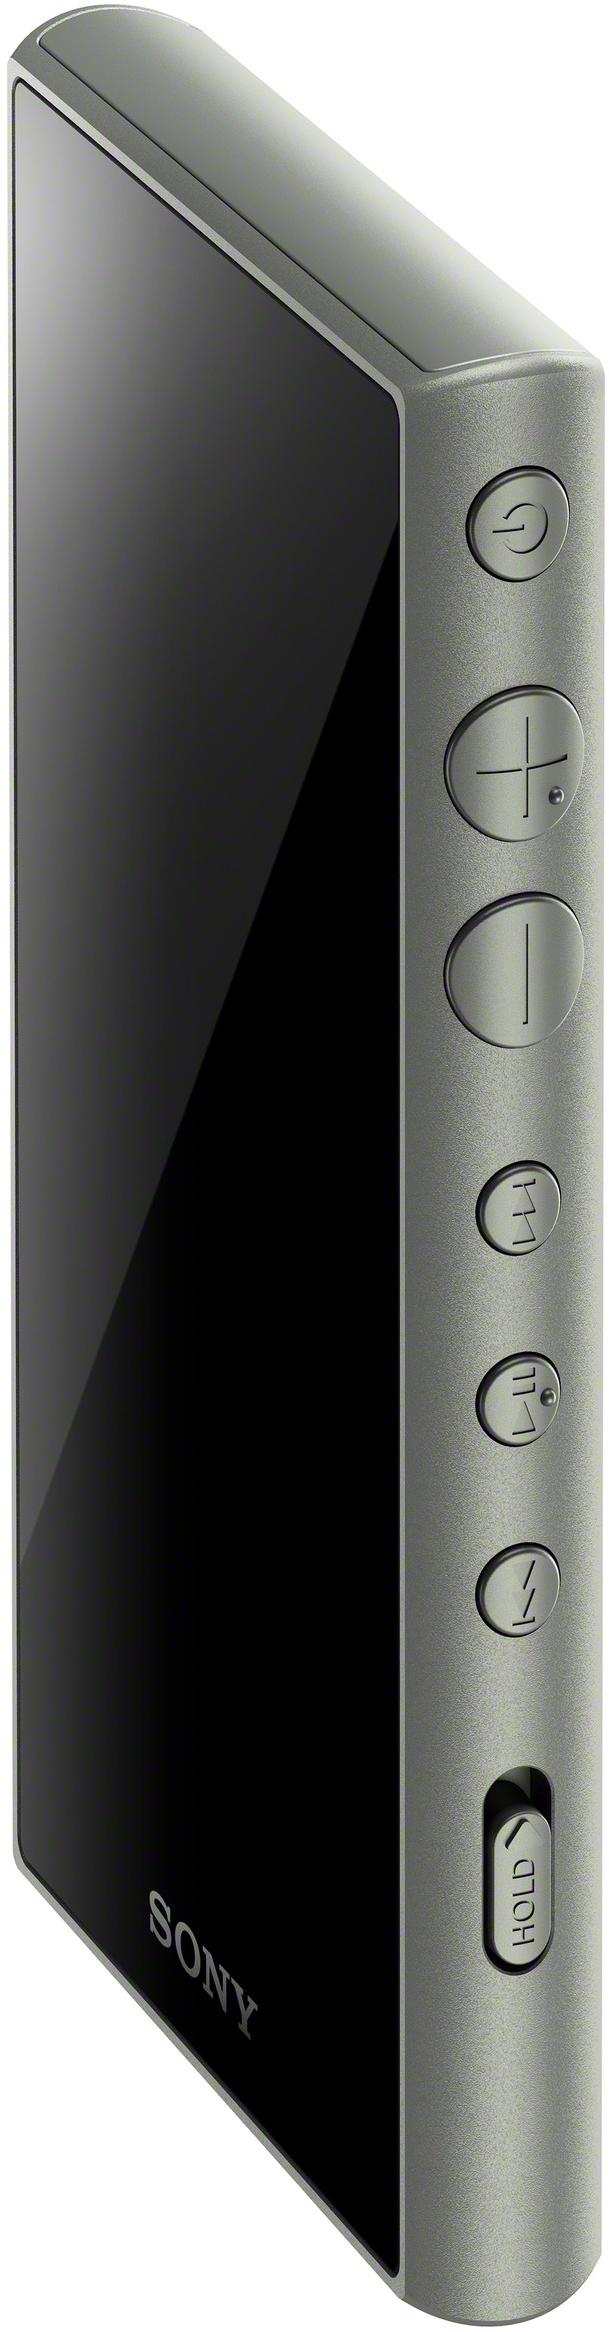 SONY Grün GB, Mp3-Player Android NW-A105 9.0 16 Walkman